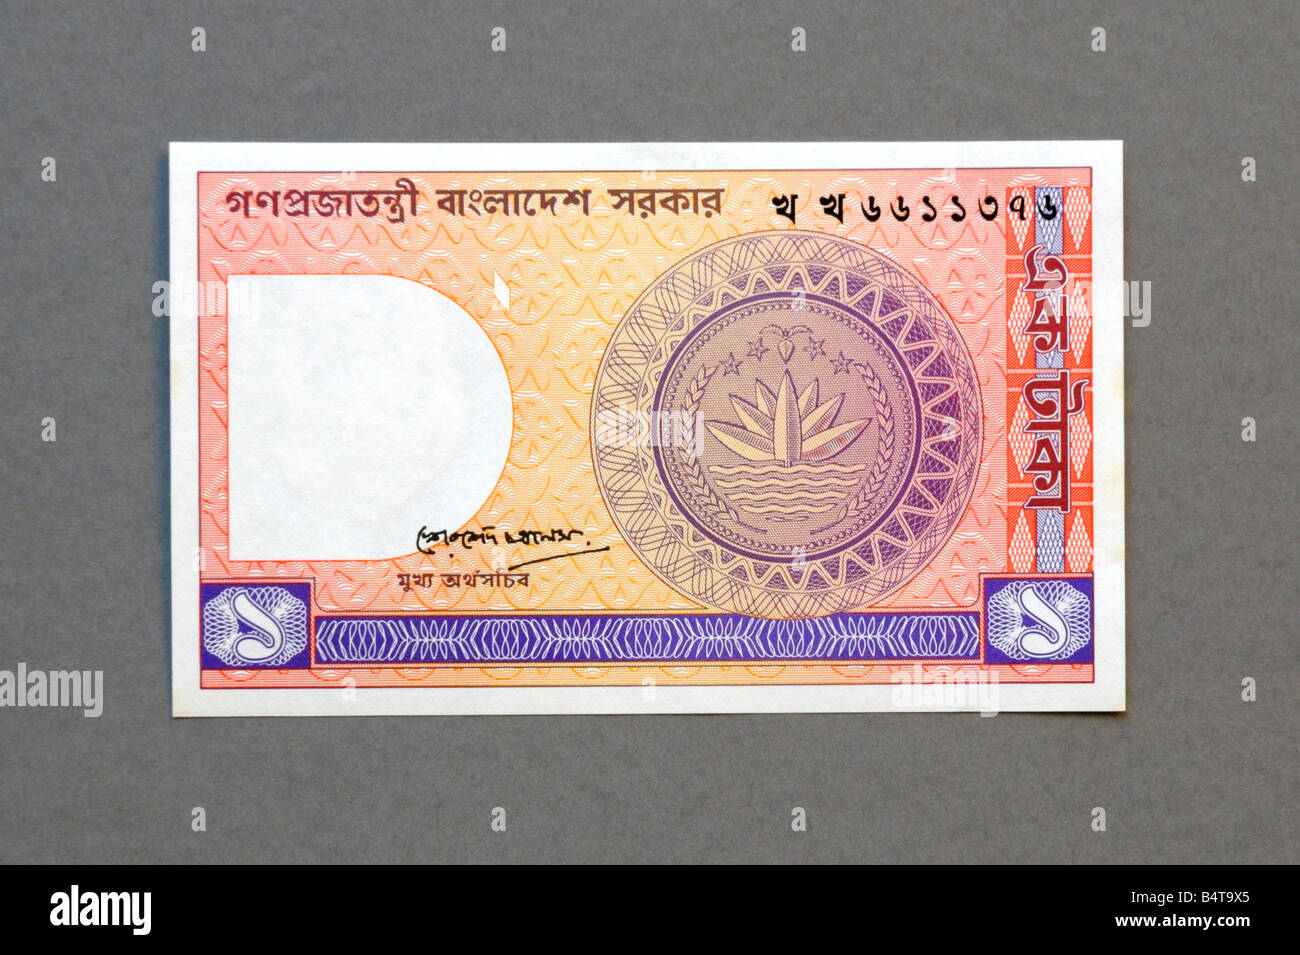 Bangladesh One 1 Taka Bank Note Stock Photo